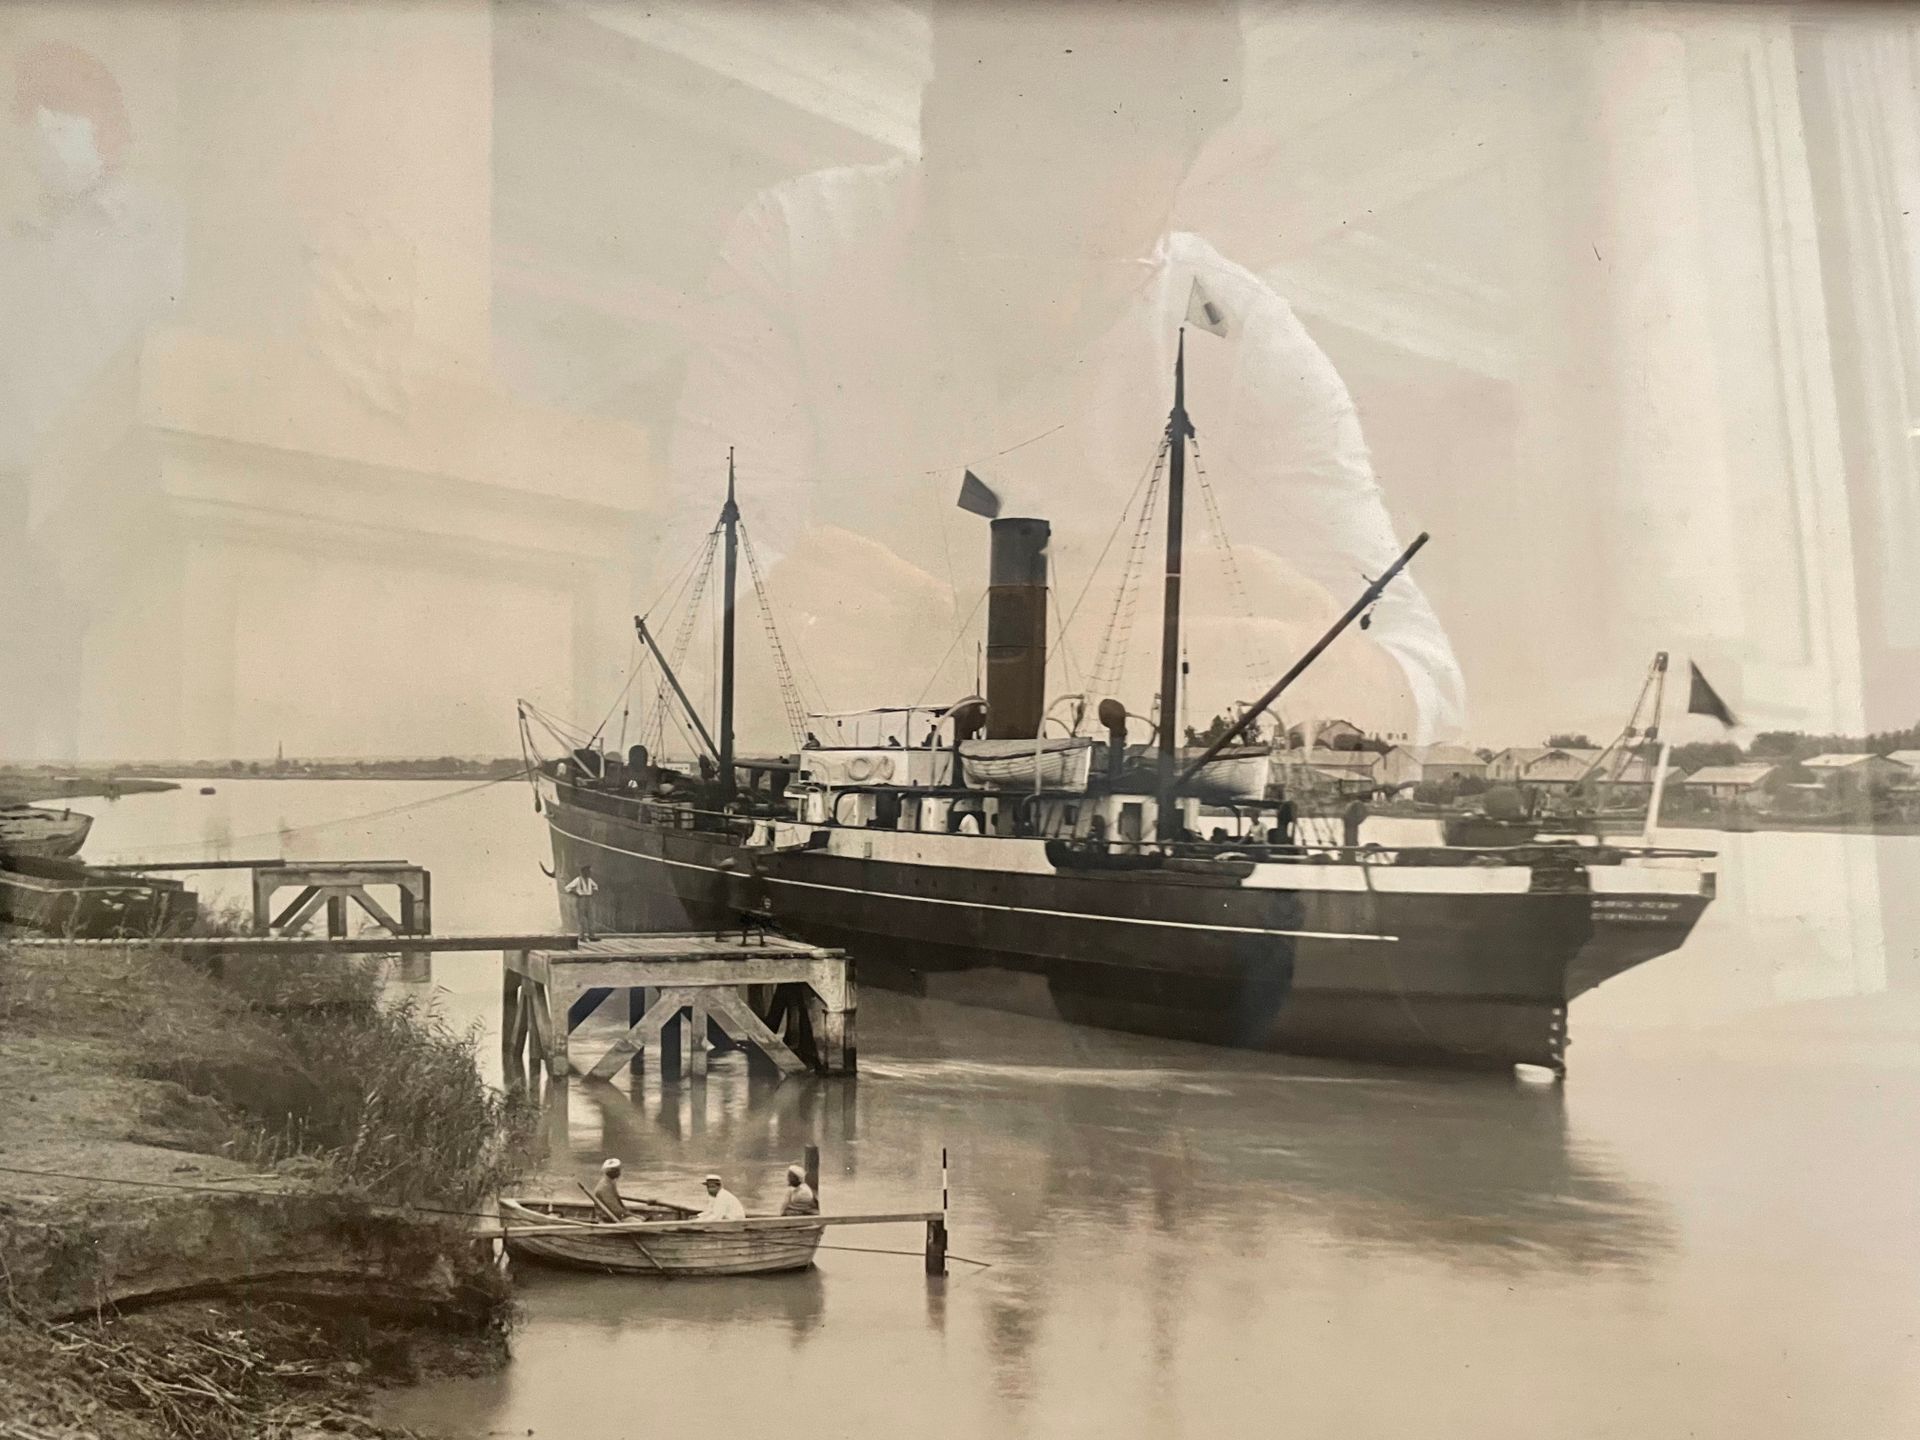 Marcel Paul 凯尼特拉港的景色 3张大照片
一张签名的
在一个天然木框中